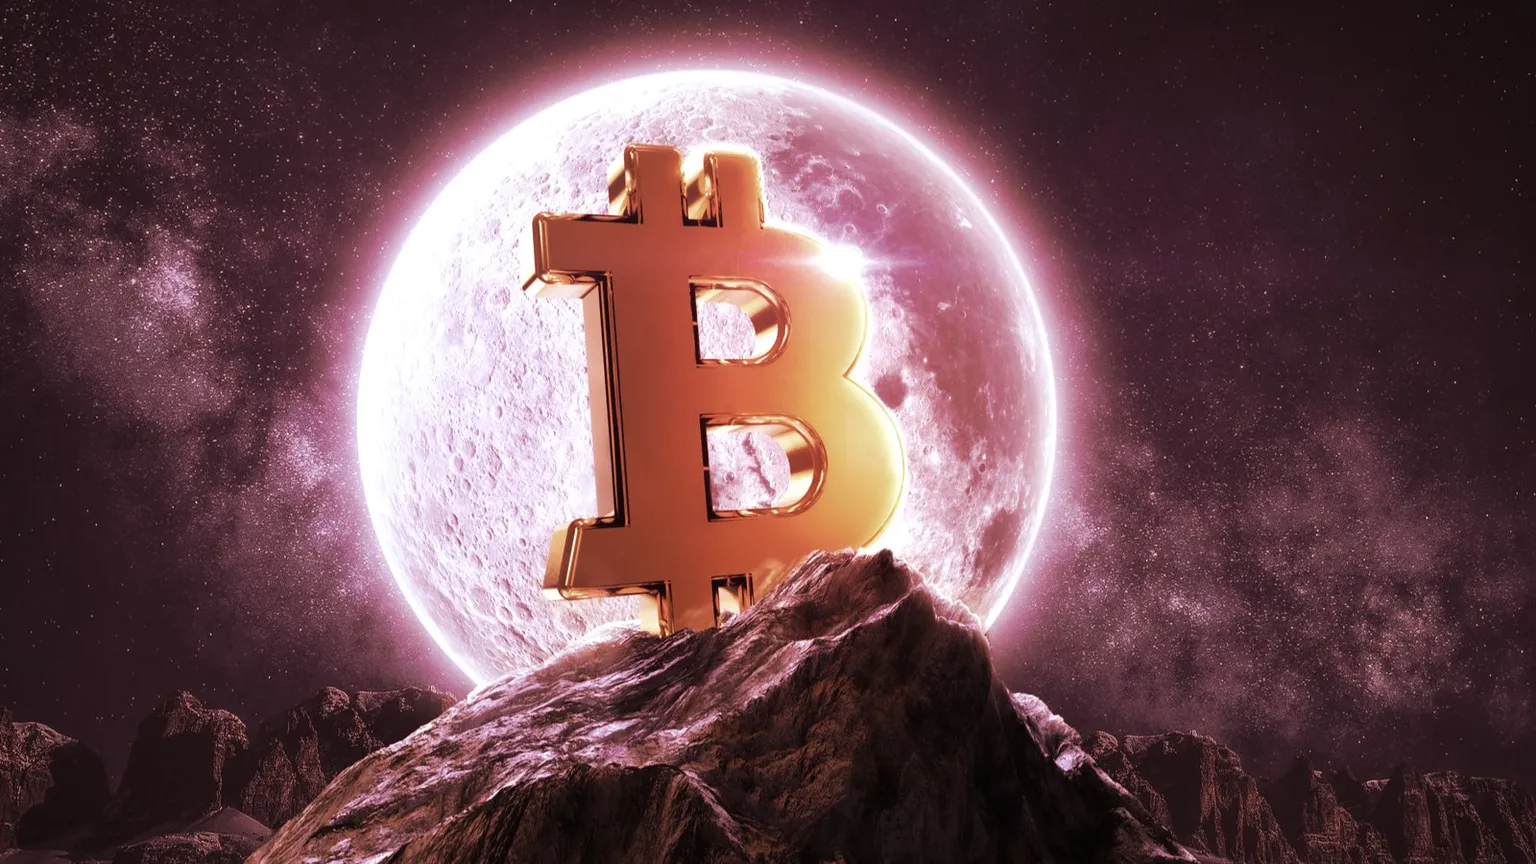 Bitcoin's moon. Image: Shutterstock